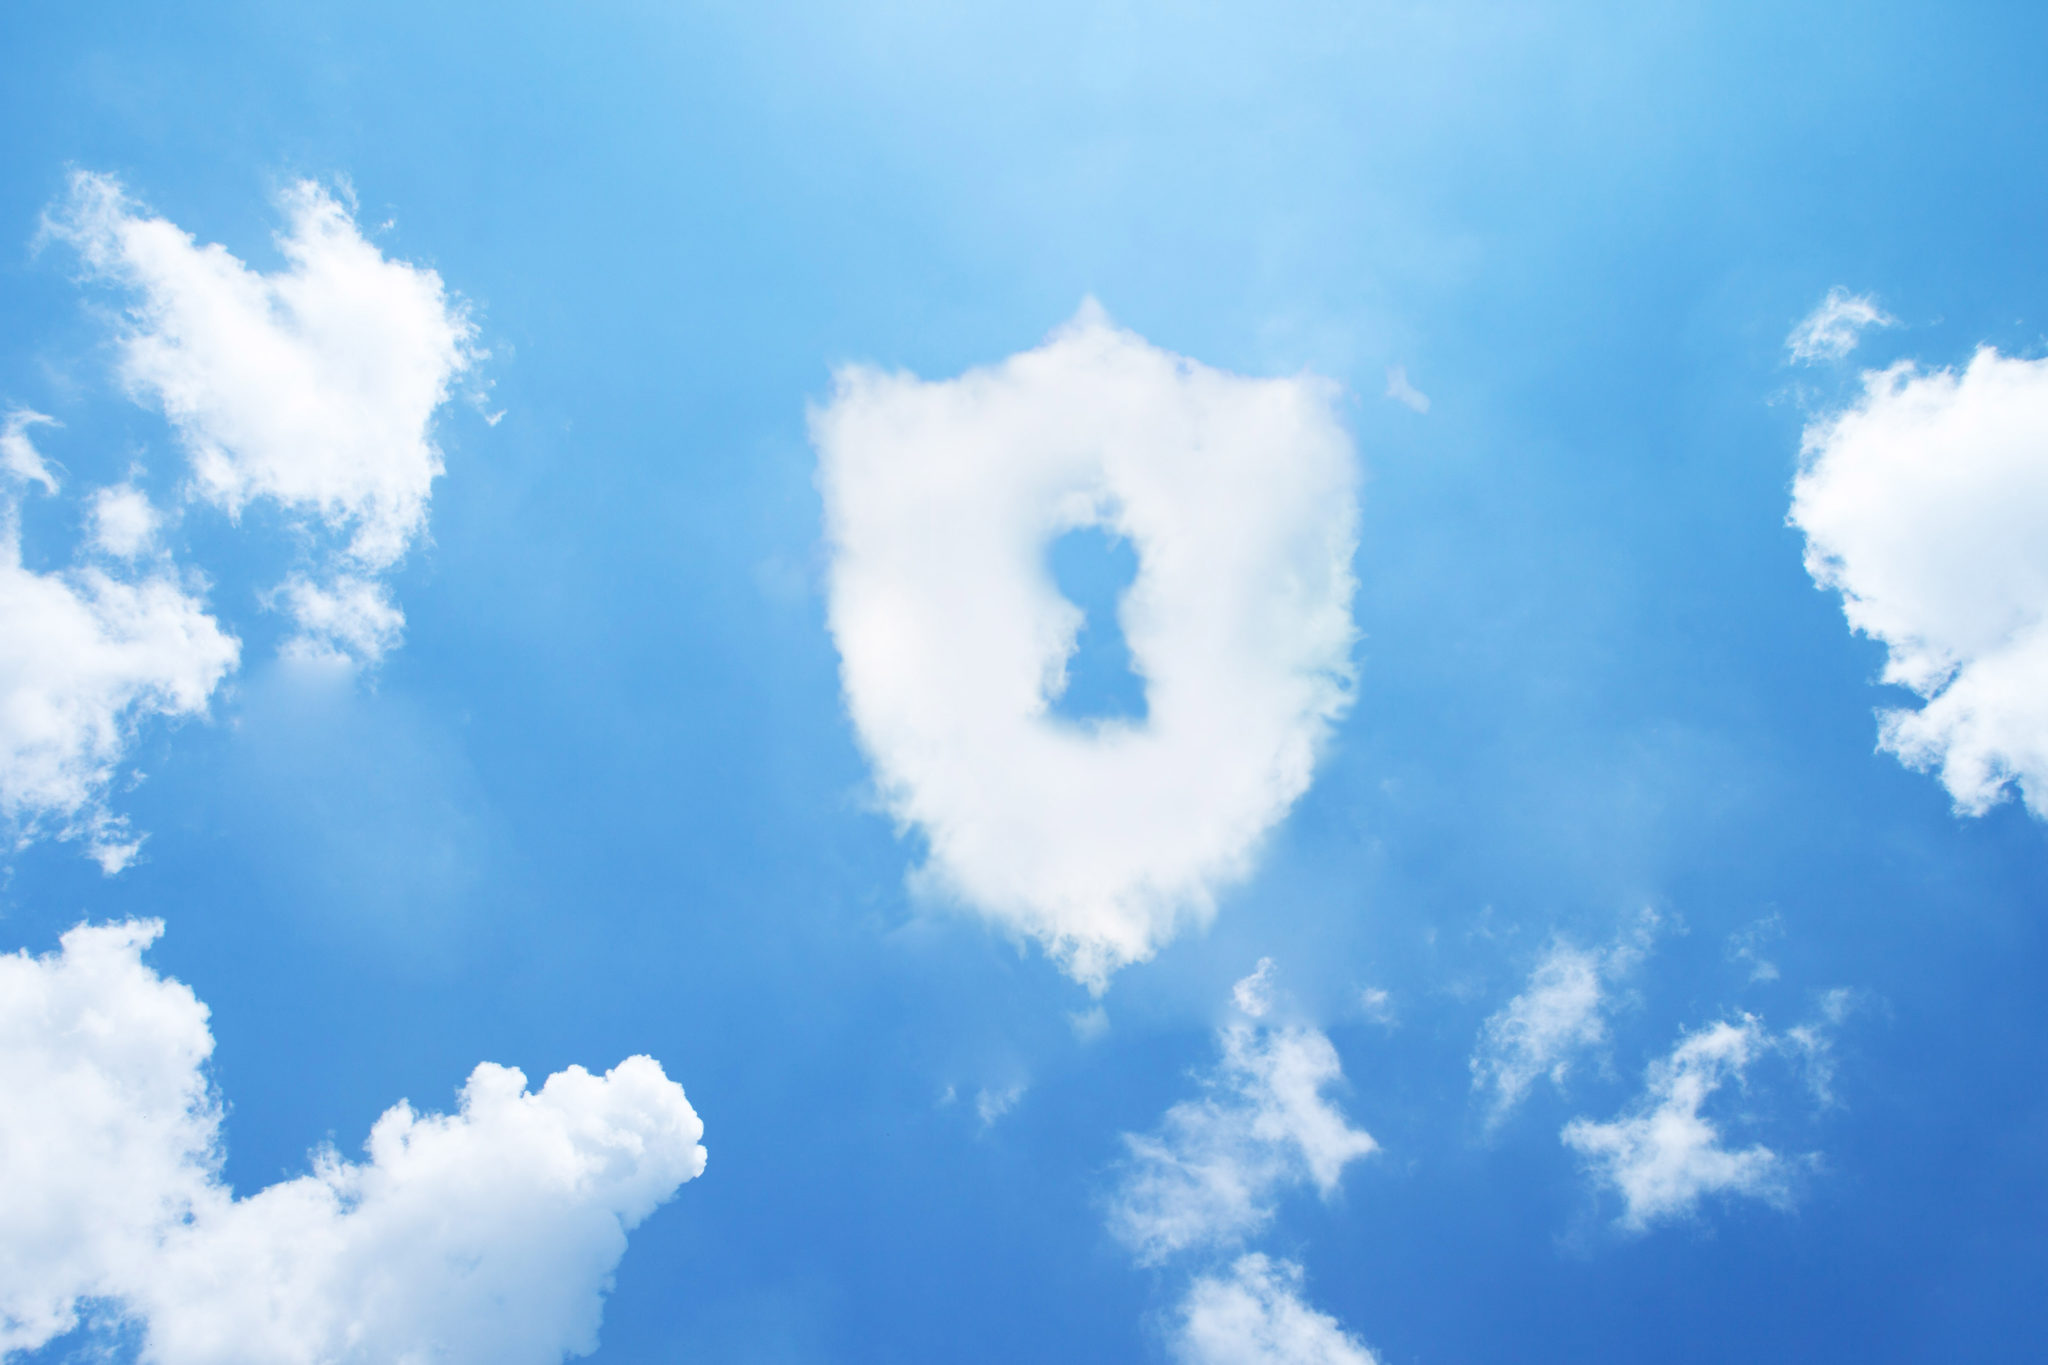 Cloud with a shape inside of it like a lock - Votiro